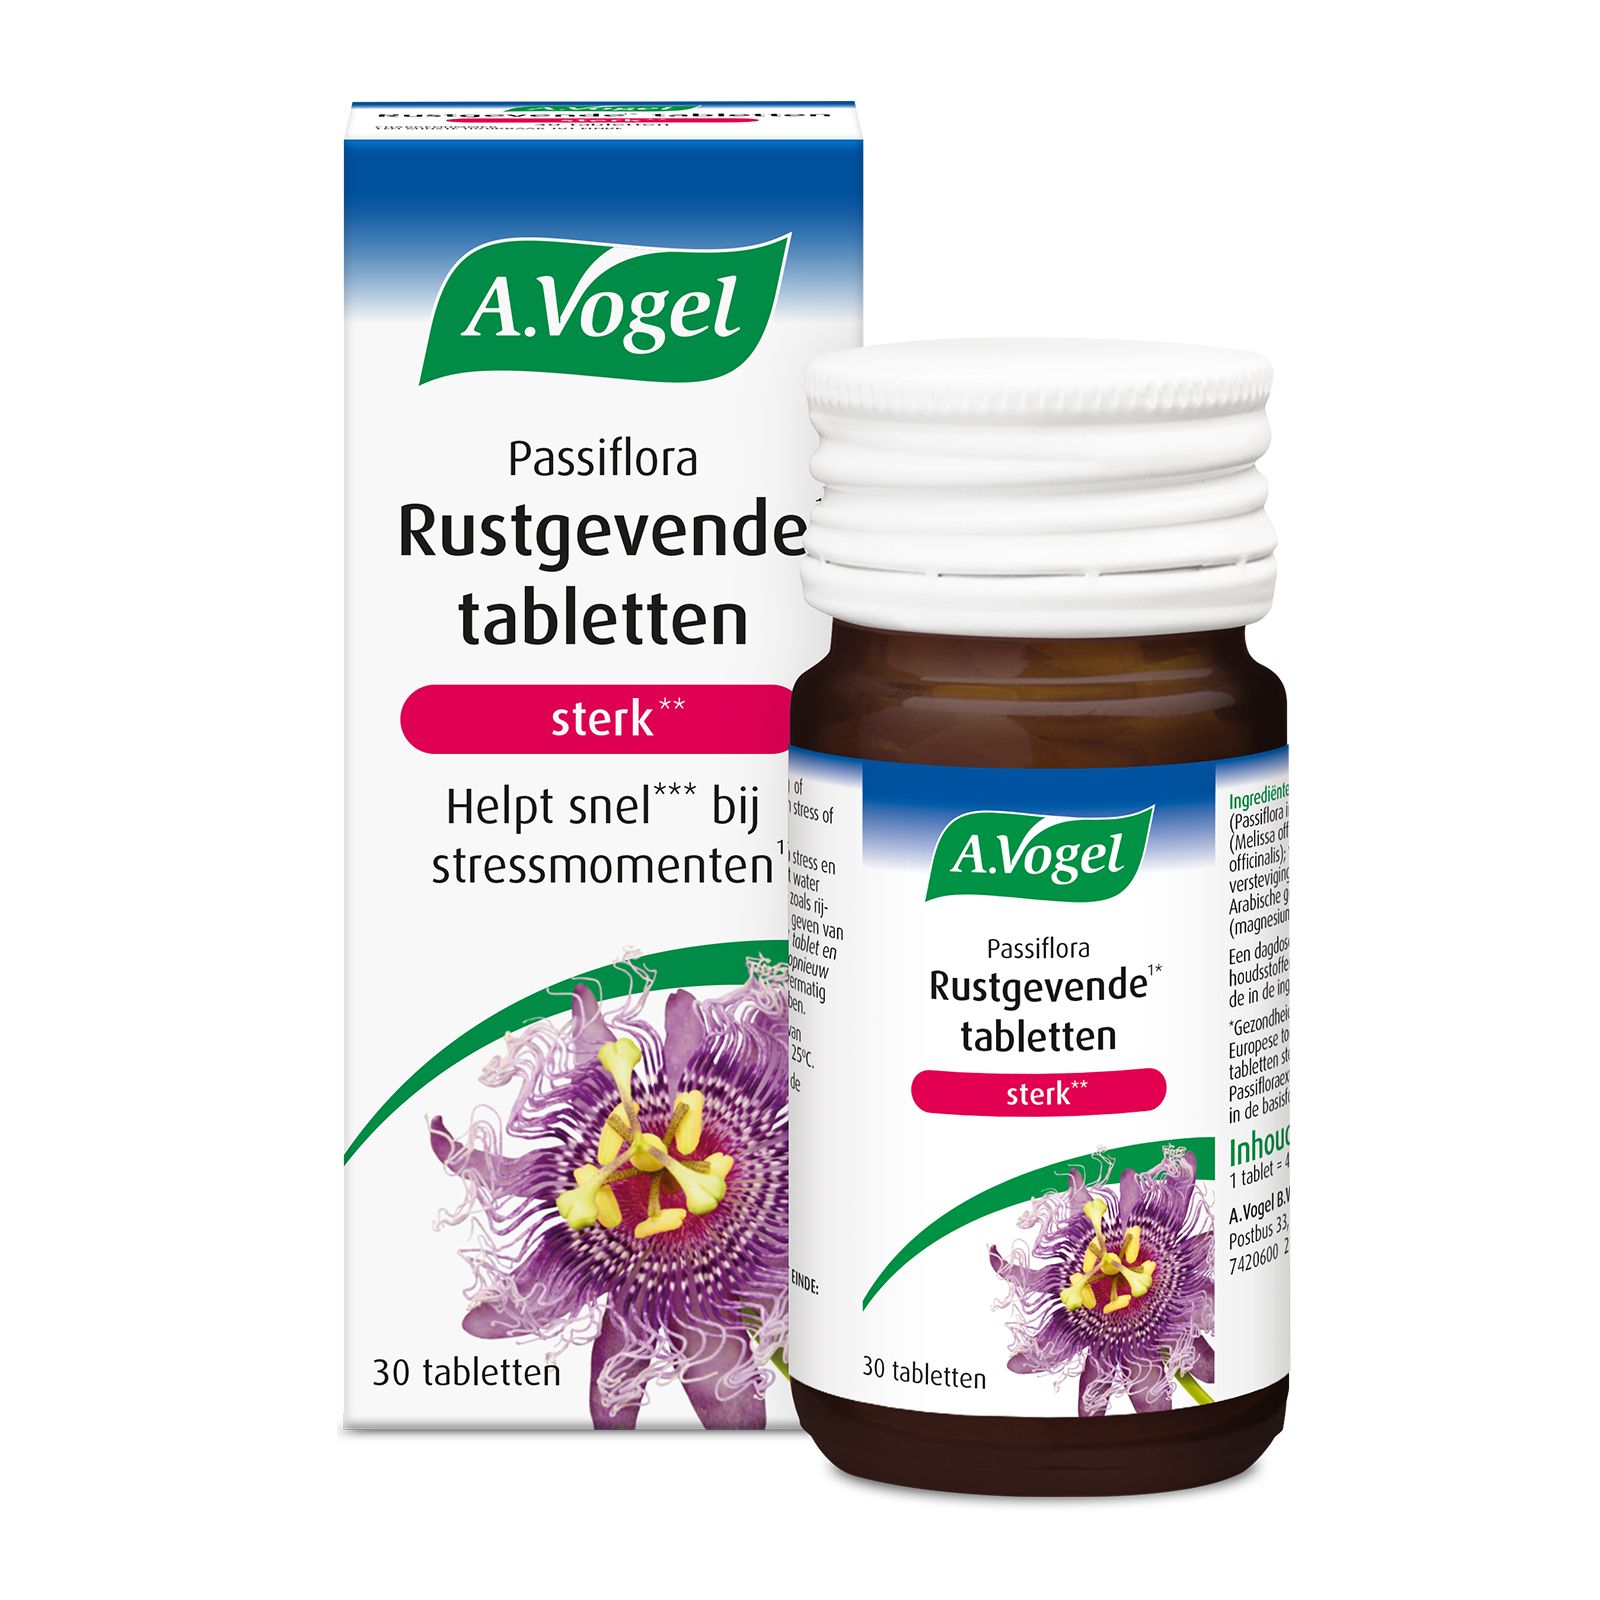 A.Vogel Passiflora Rustgevende* Sterk** Tabletten